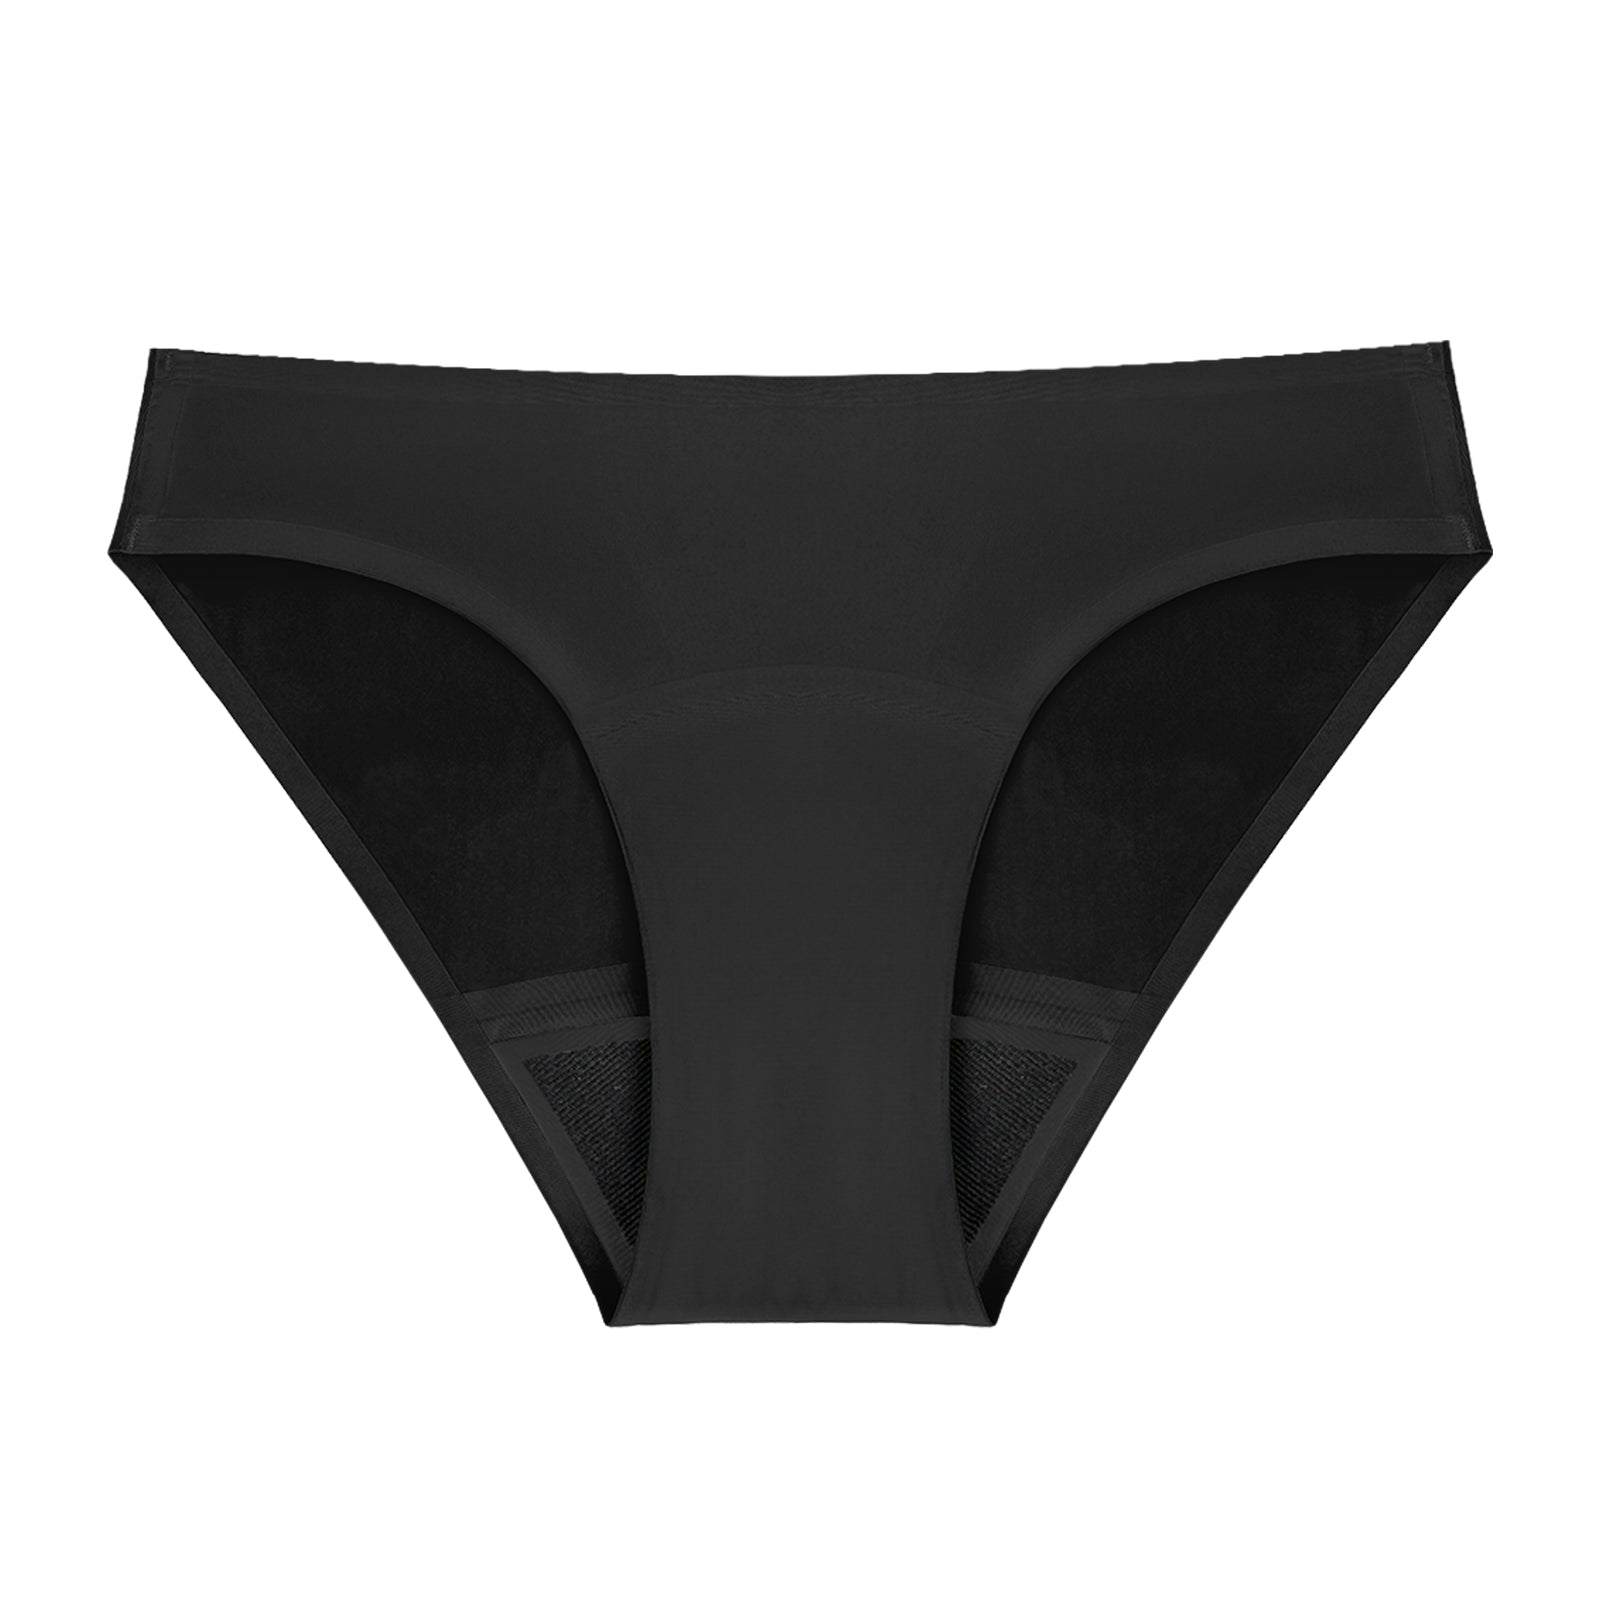 TIICHOO Period Underwear Seamless Bikini Moderate Absorbency Period Panties  Incontinence Leak Proof Underwear for Women 3 Pack (Large, 3 Black)